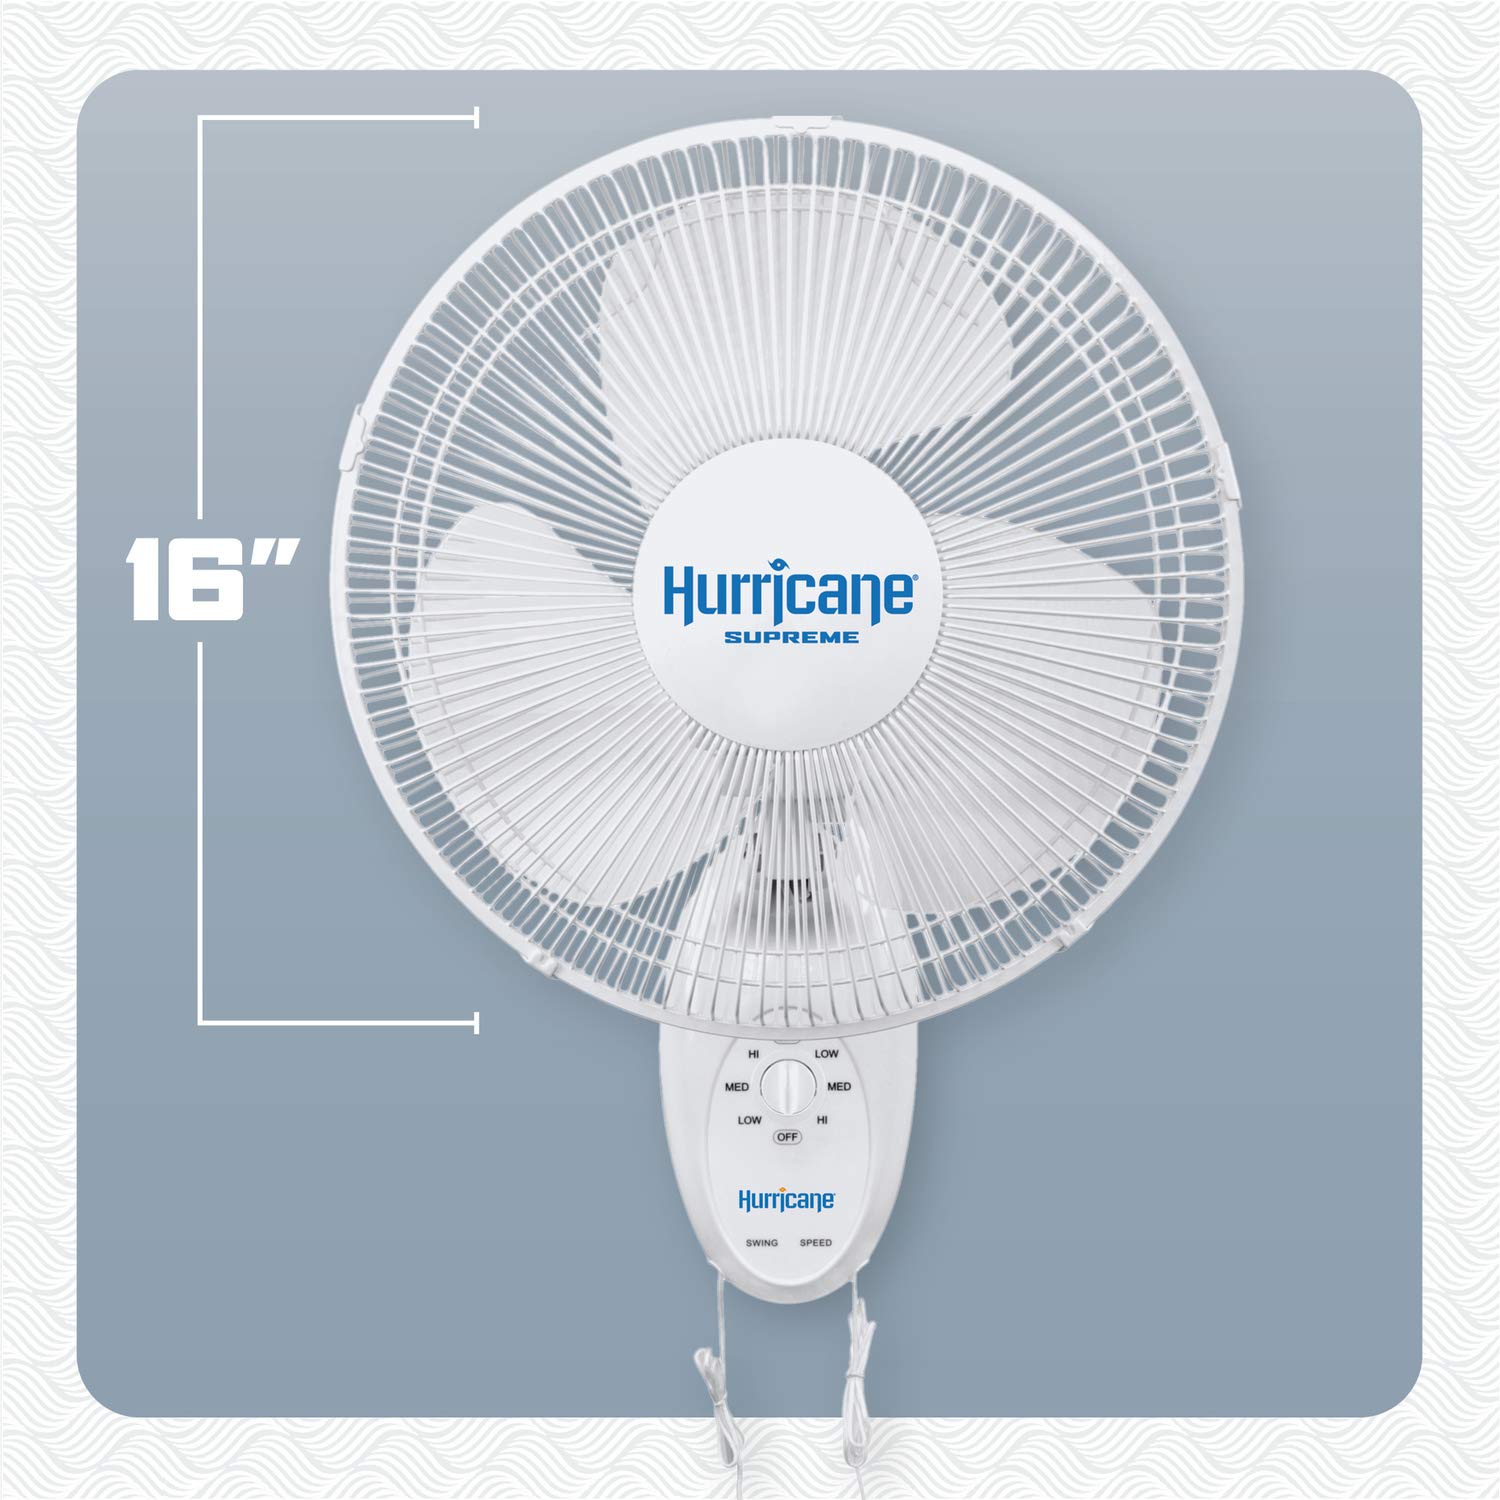 REBOX Hurricane® Supreme Oscillating Wall Mount Fan 16" - HGC736505_RE